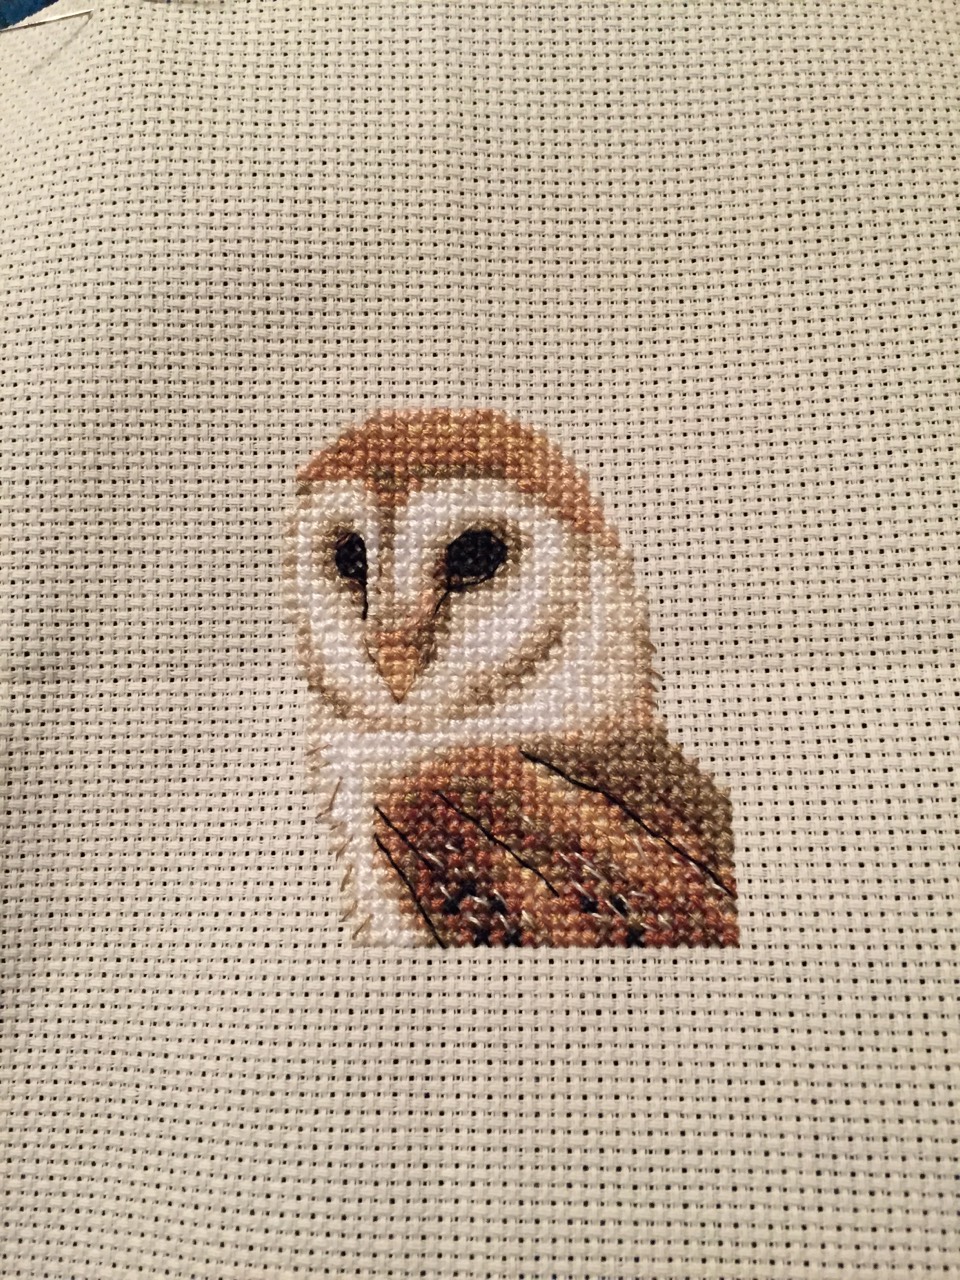 Barn Owl complete.jpg